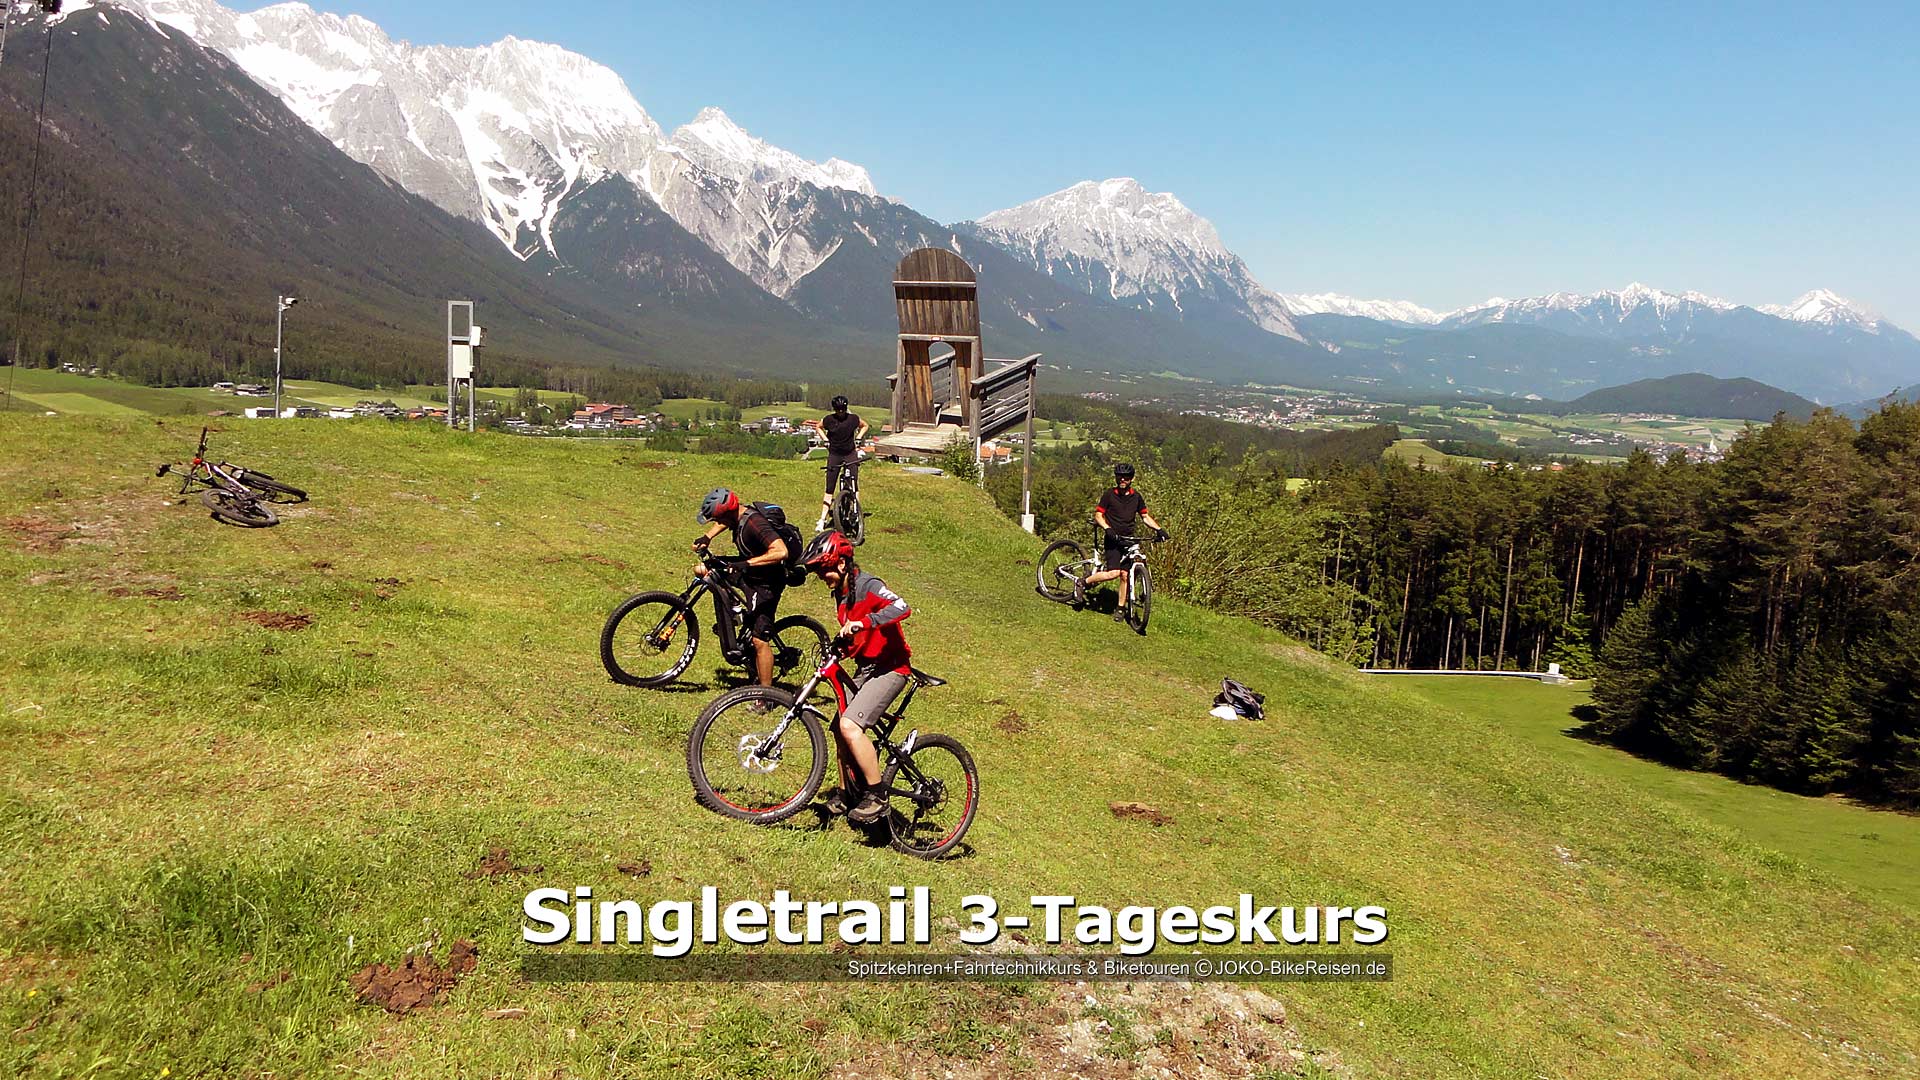 MTB-Singletrail 3-Tageskurs: Basic-Übungen am 1. Kurstag, hier Anfahren am Berg